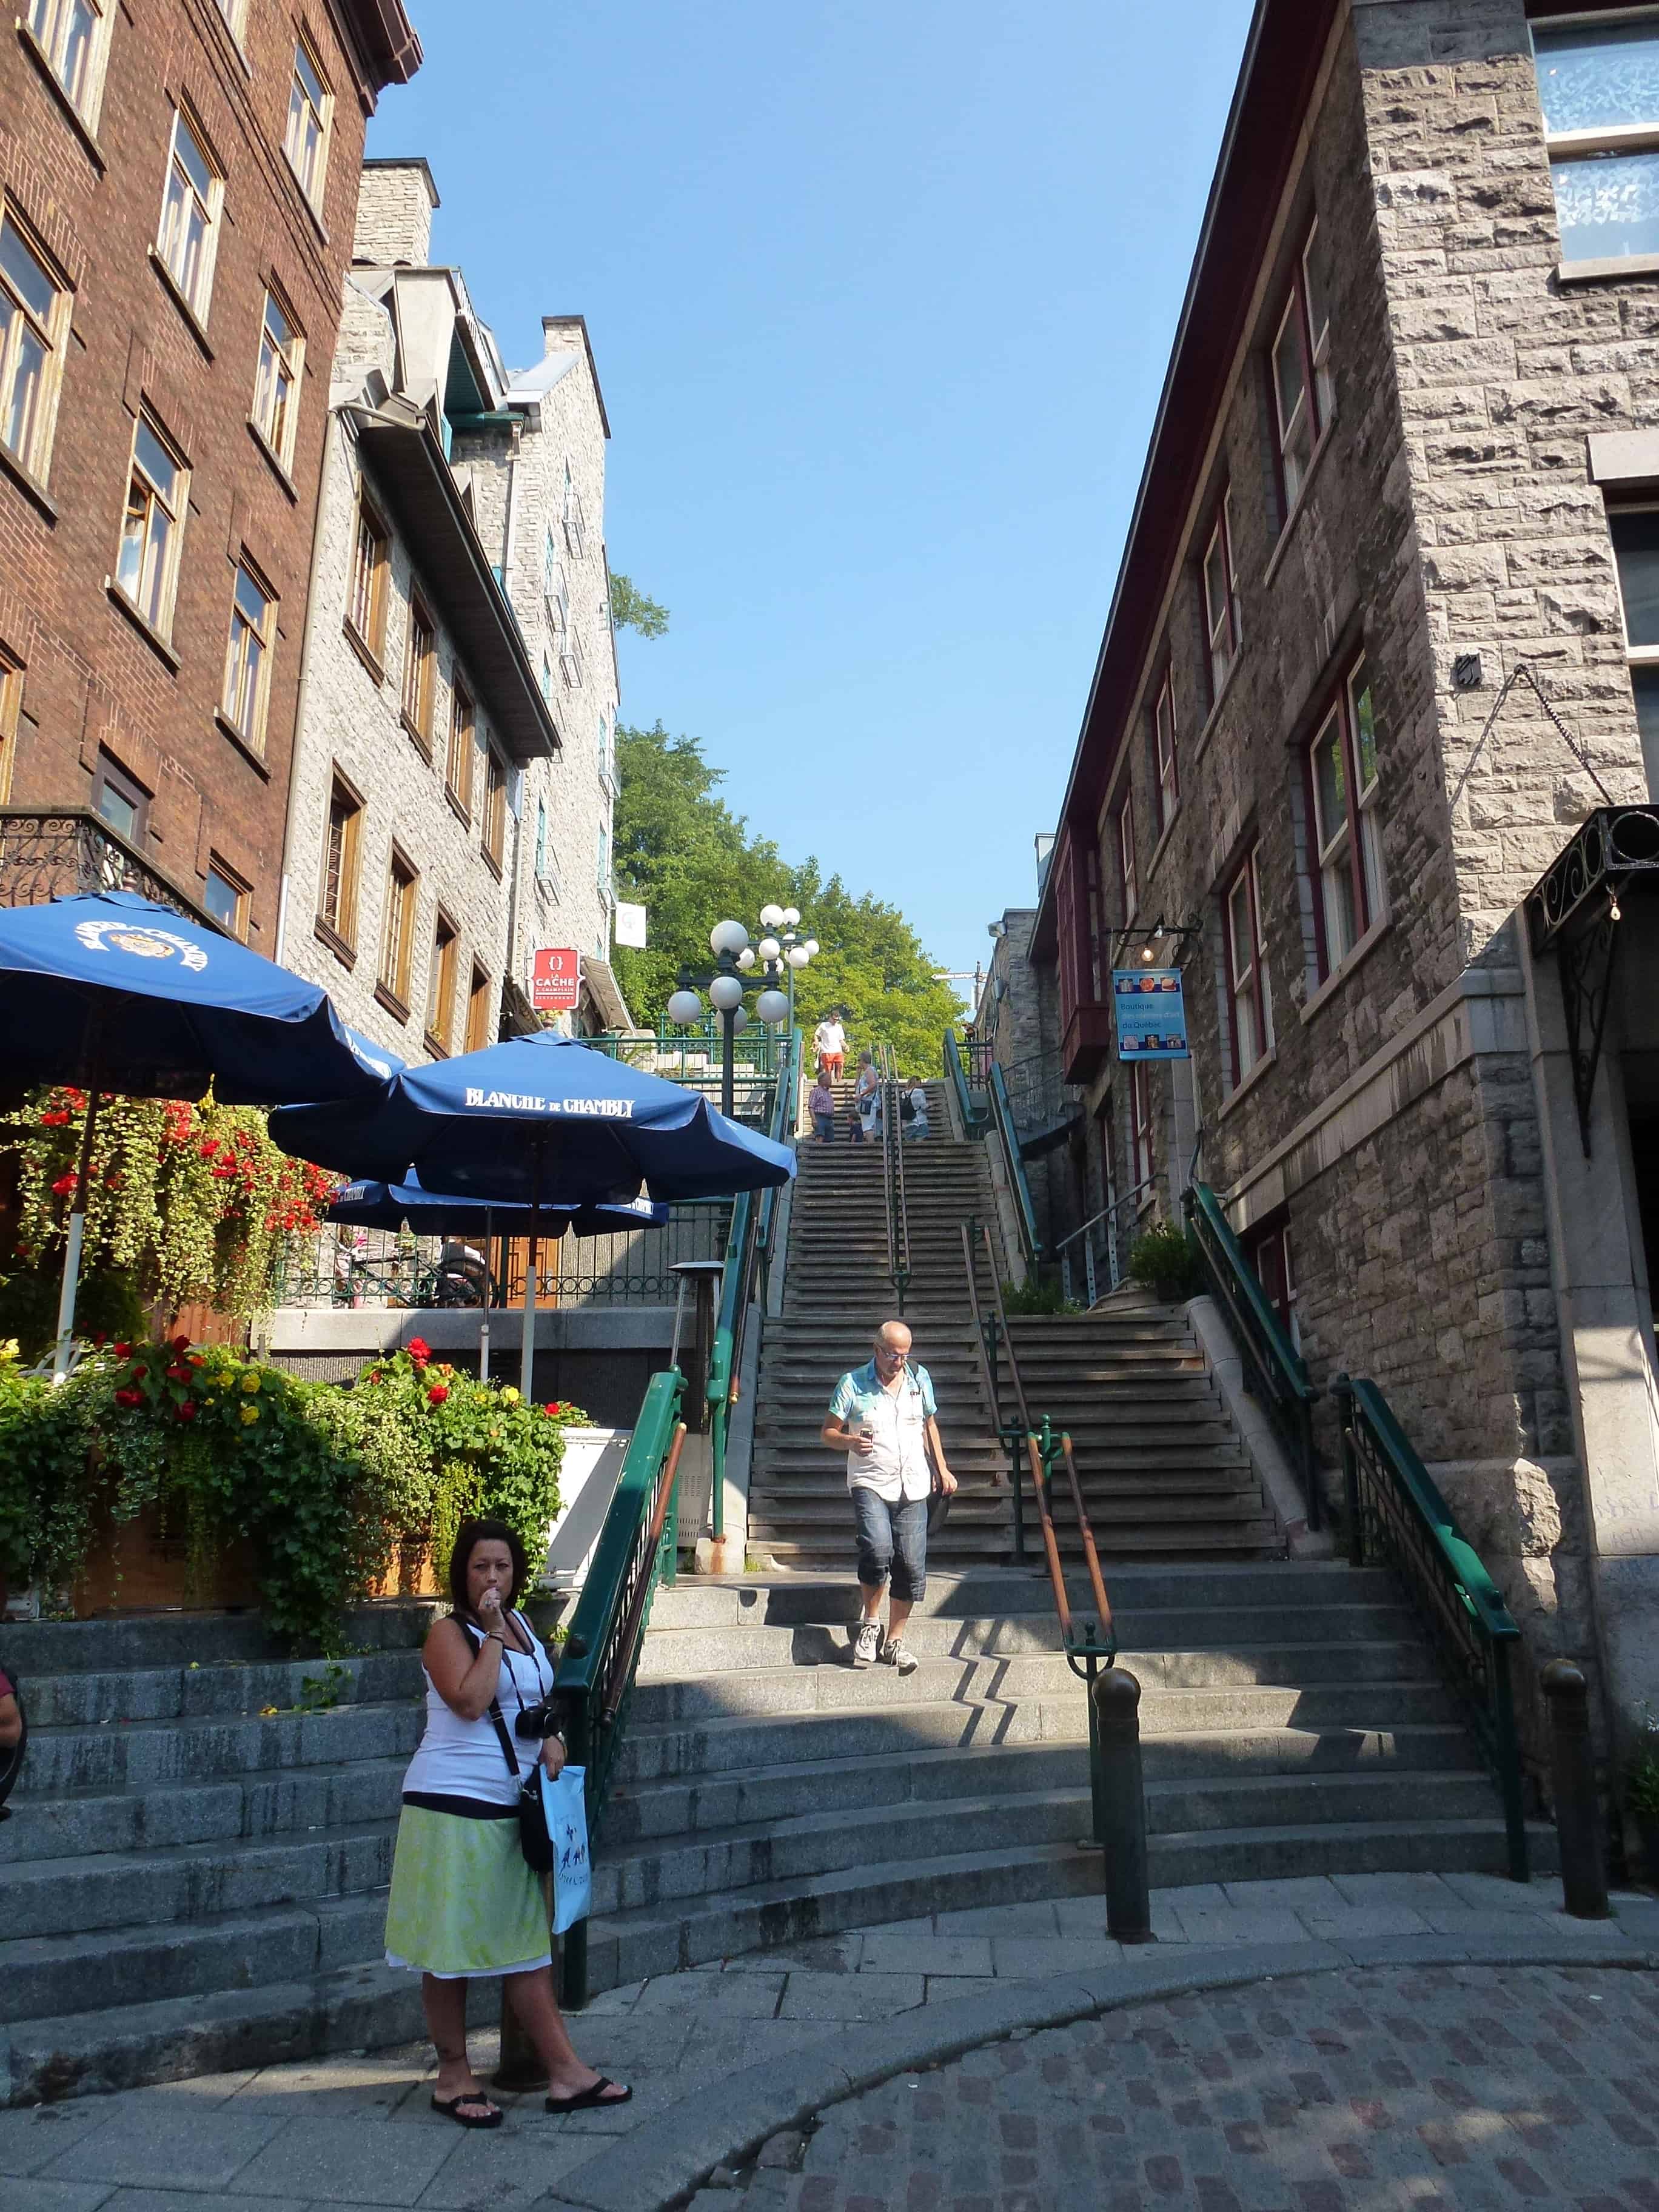 Escalier Casse-Cou in Québec, Canada